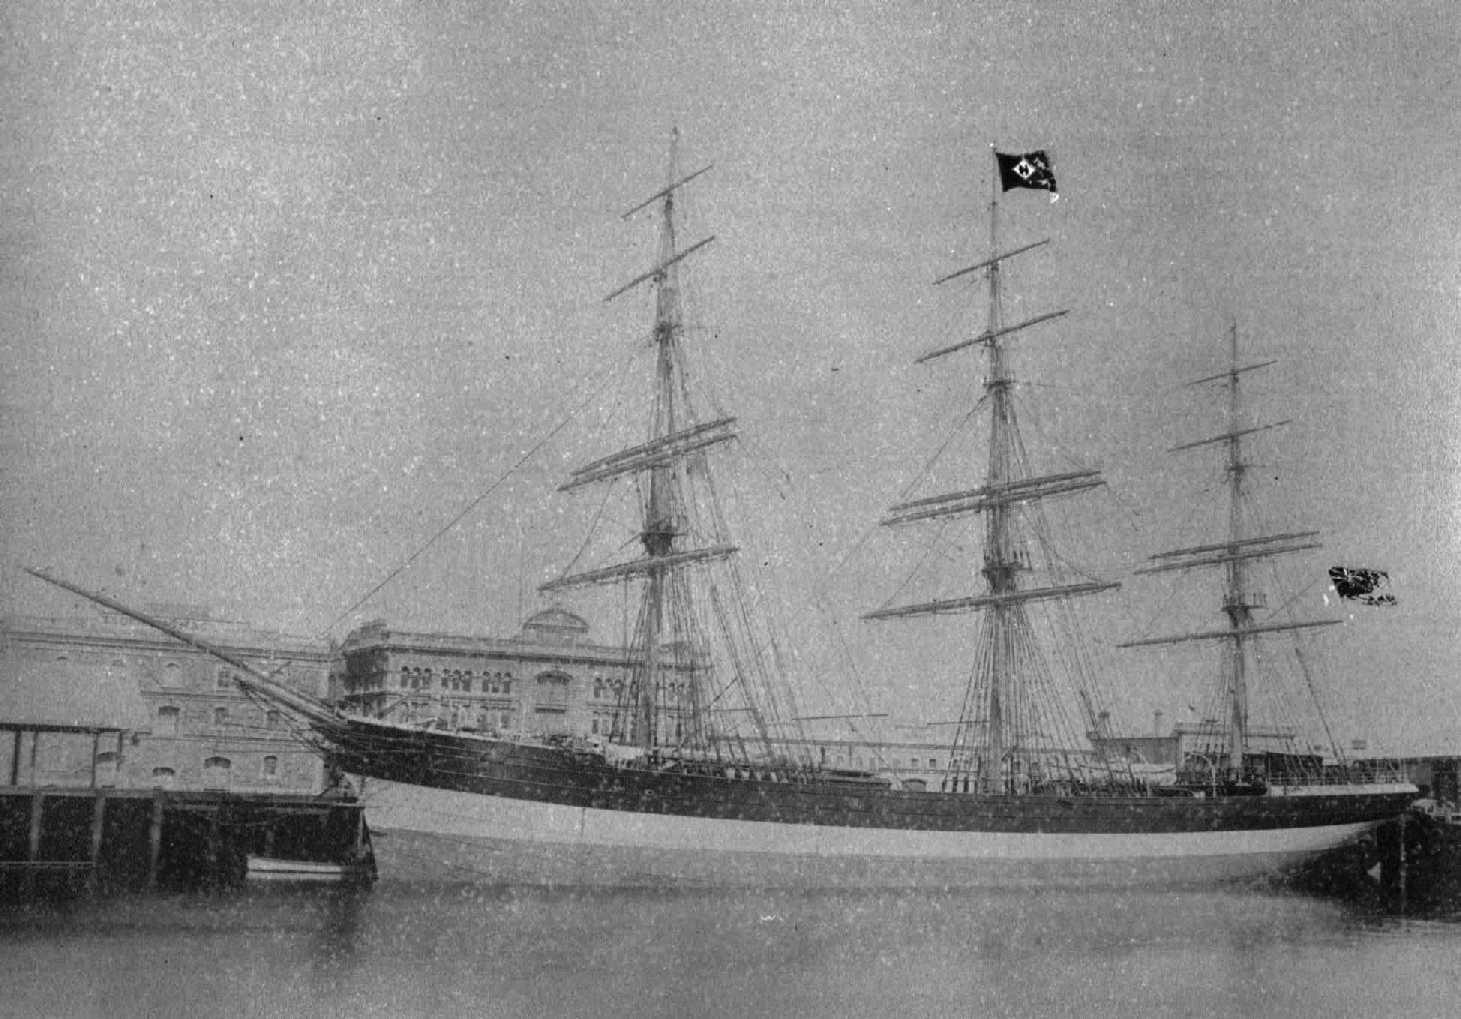 Image: Three masted barque